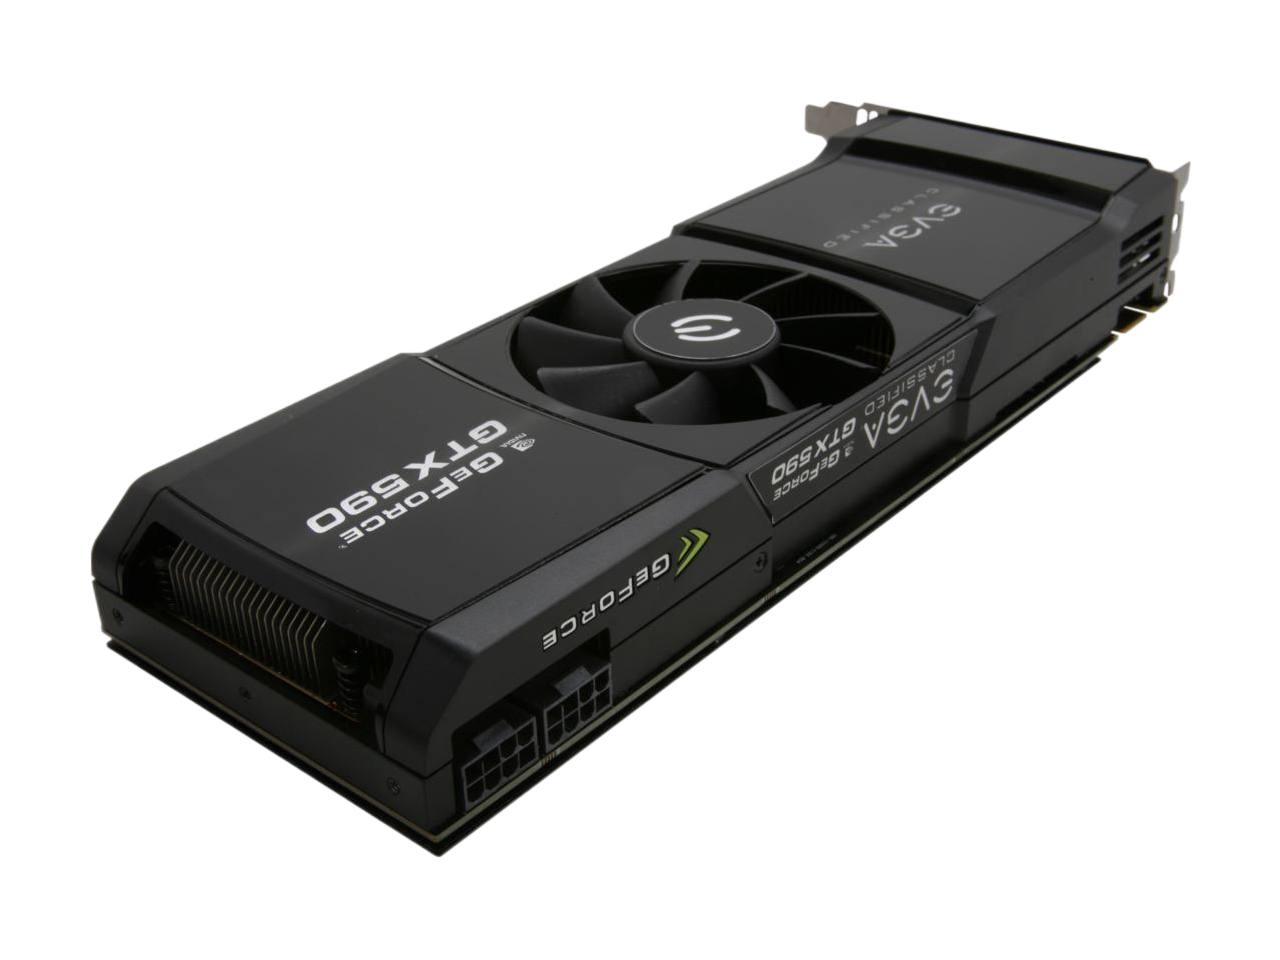 EVGA GeForce GTX 590 Classified 3072MB 768-bit GDDR5 PCI Express 2.0 x16 HDCP Ready SLI Support Video Card 03G-P3-1596-AR